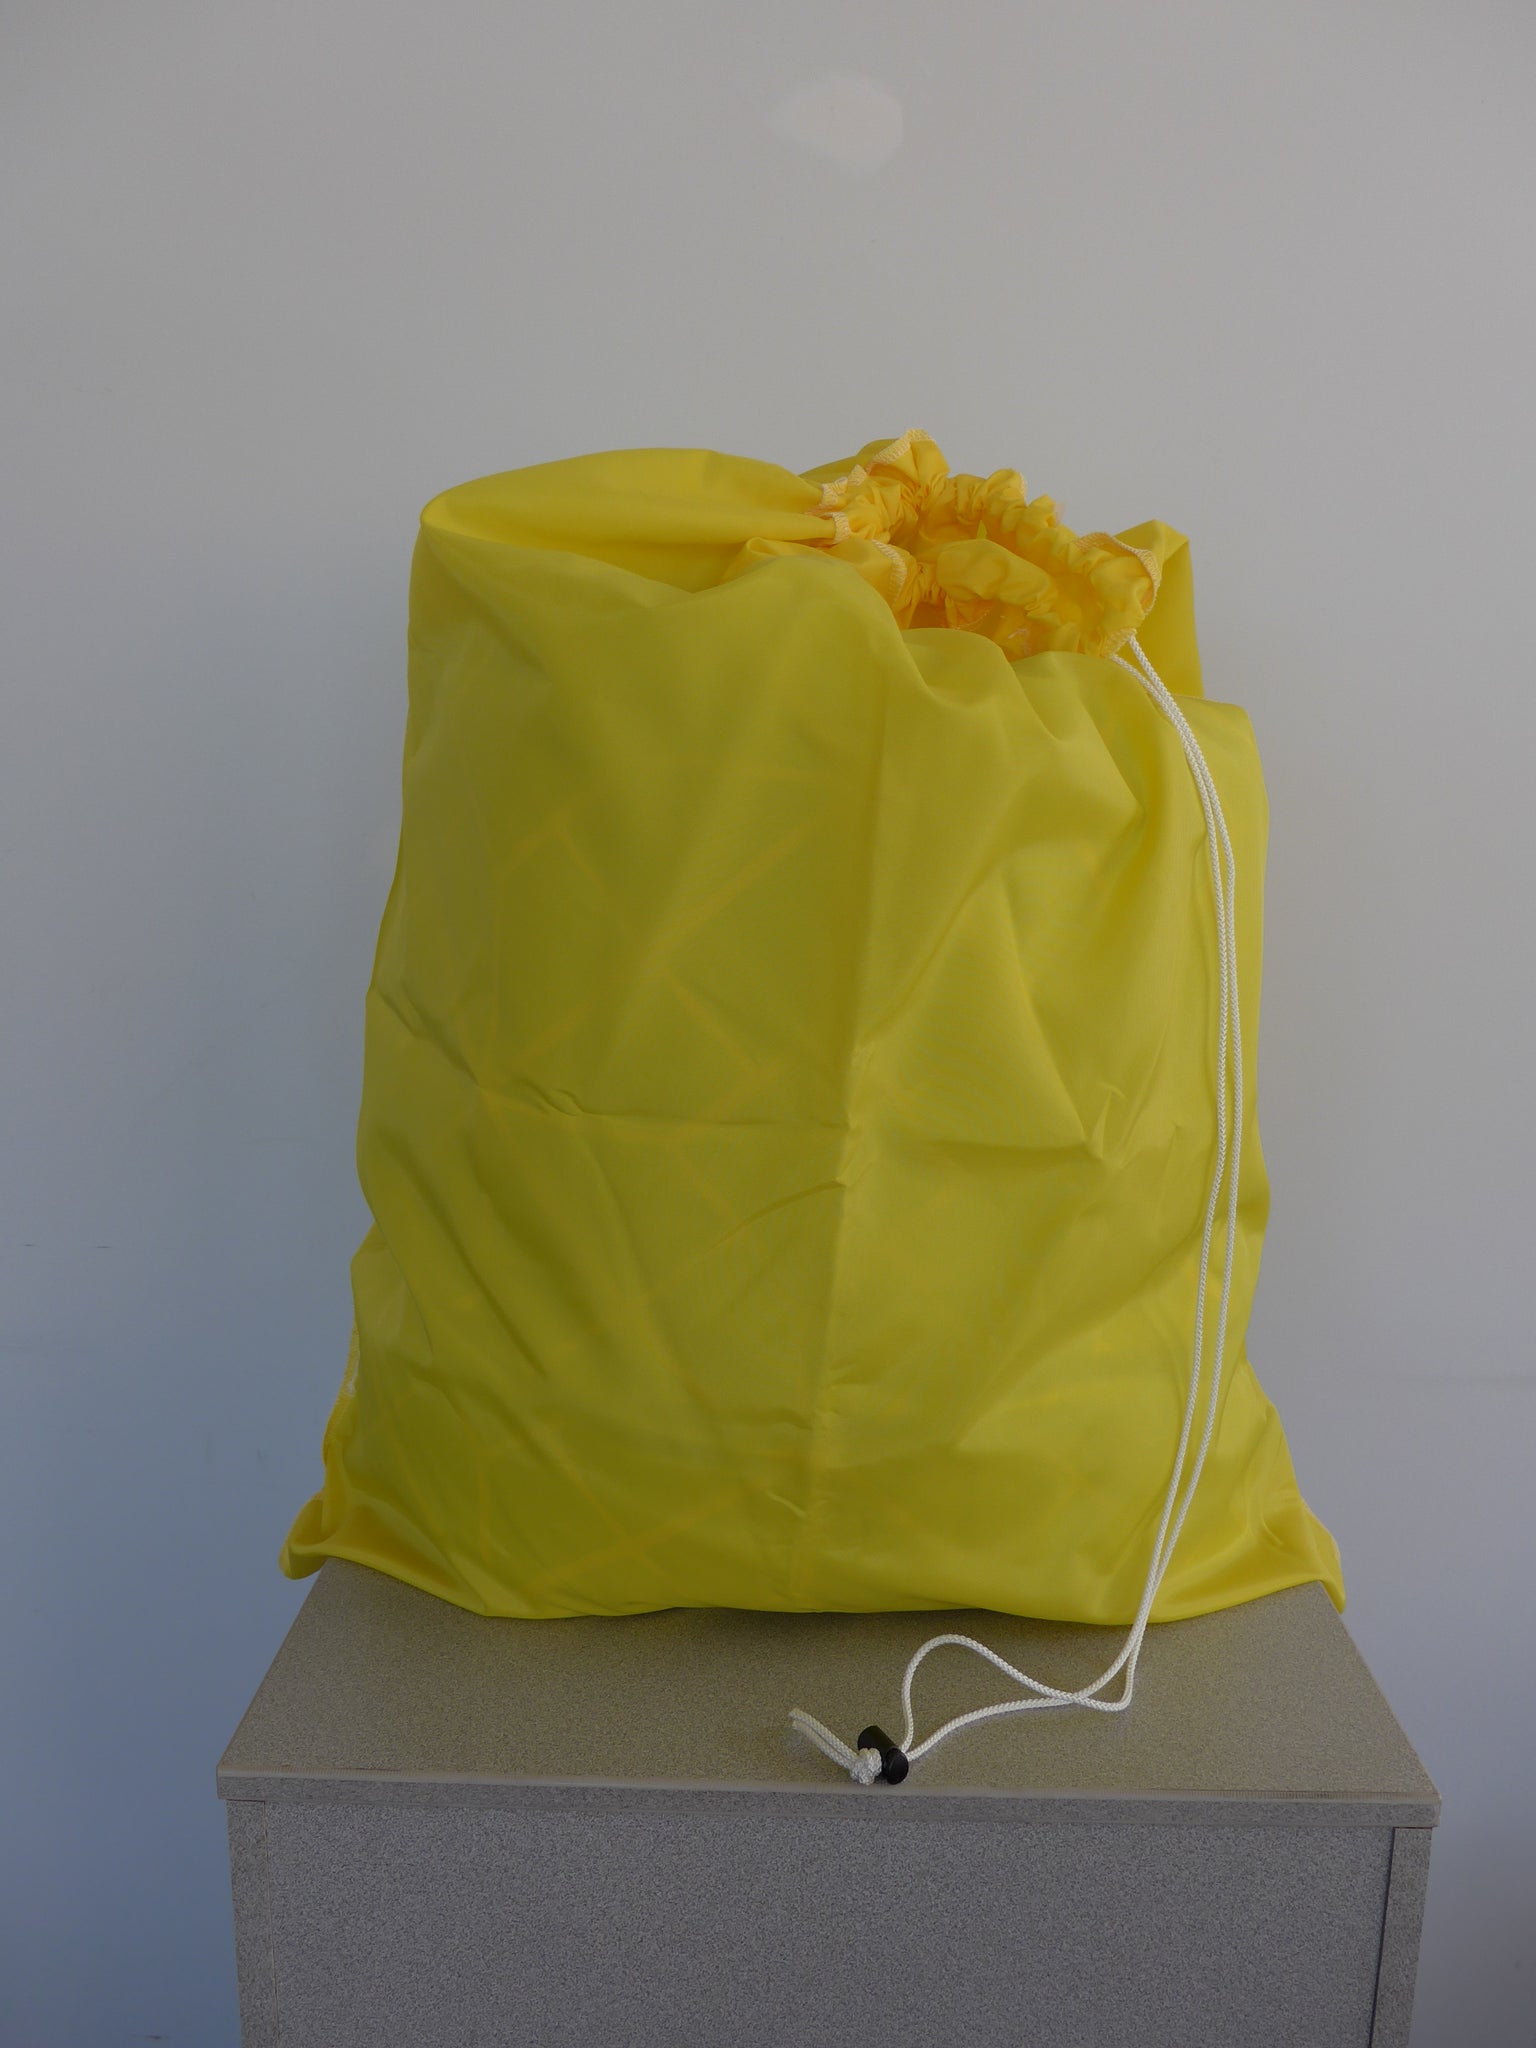 30x40 Nylon Laundry Counter Bag - Texon Athletic Towel